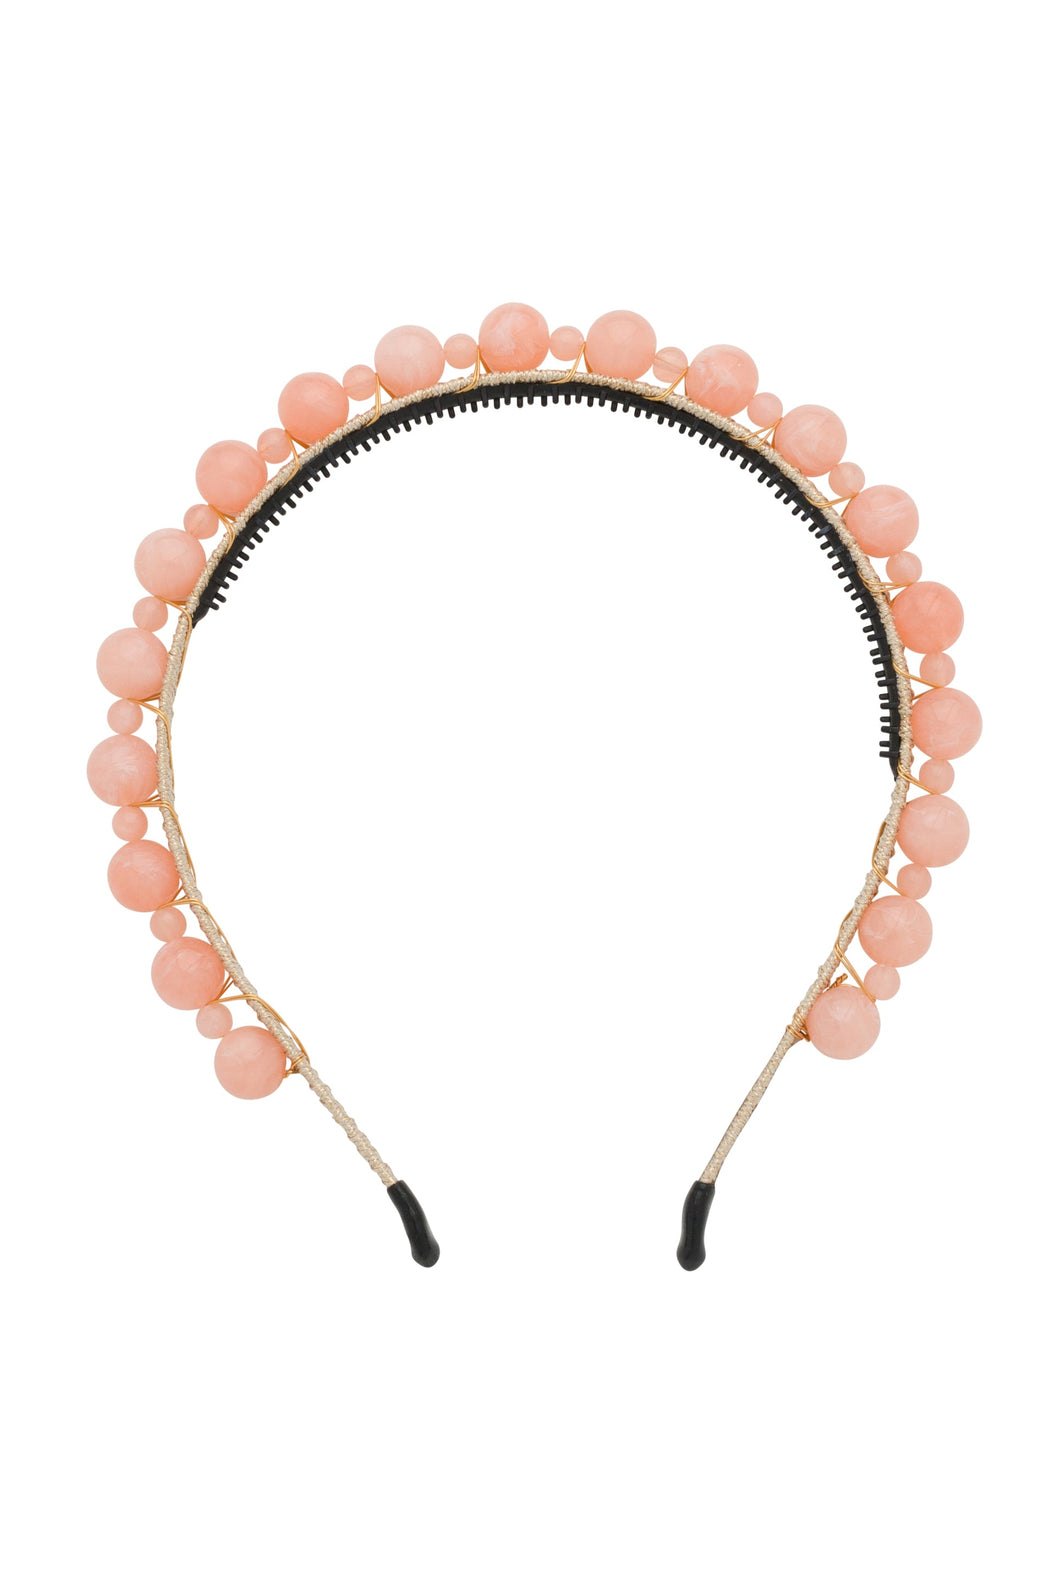 Uneven Marbles Headband - Peach